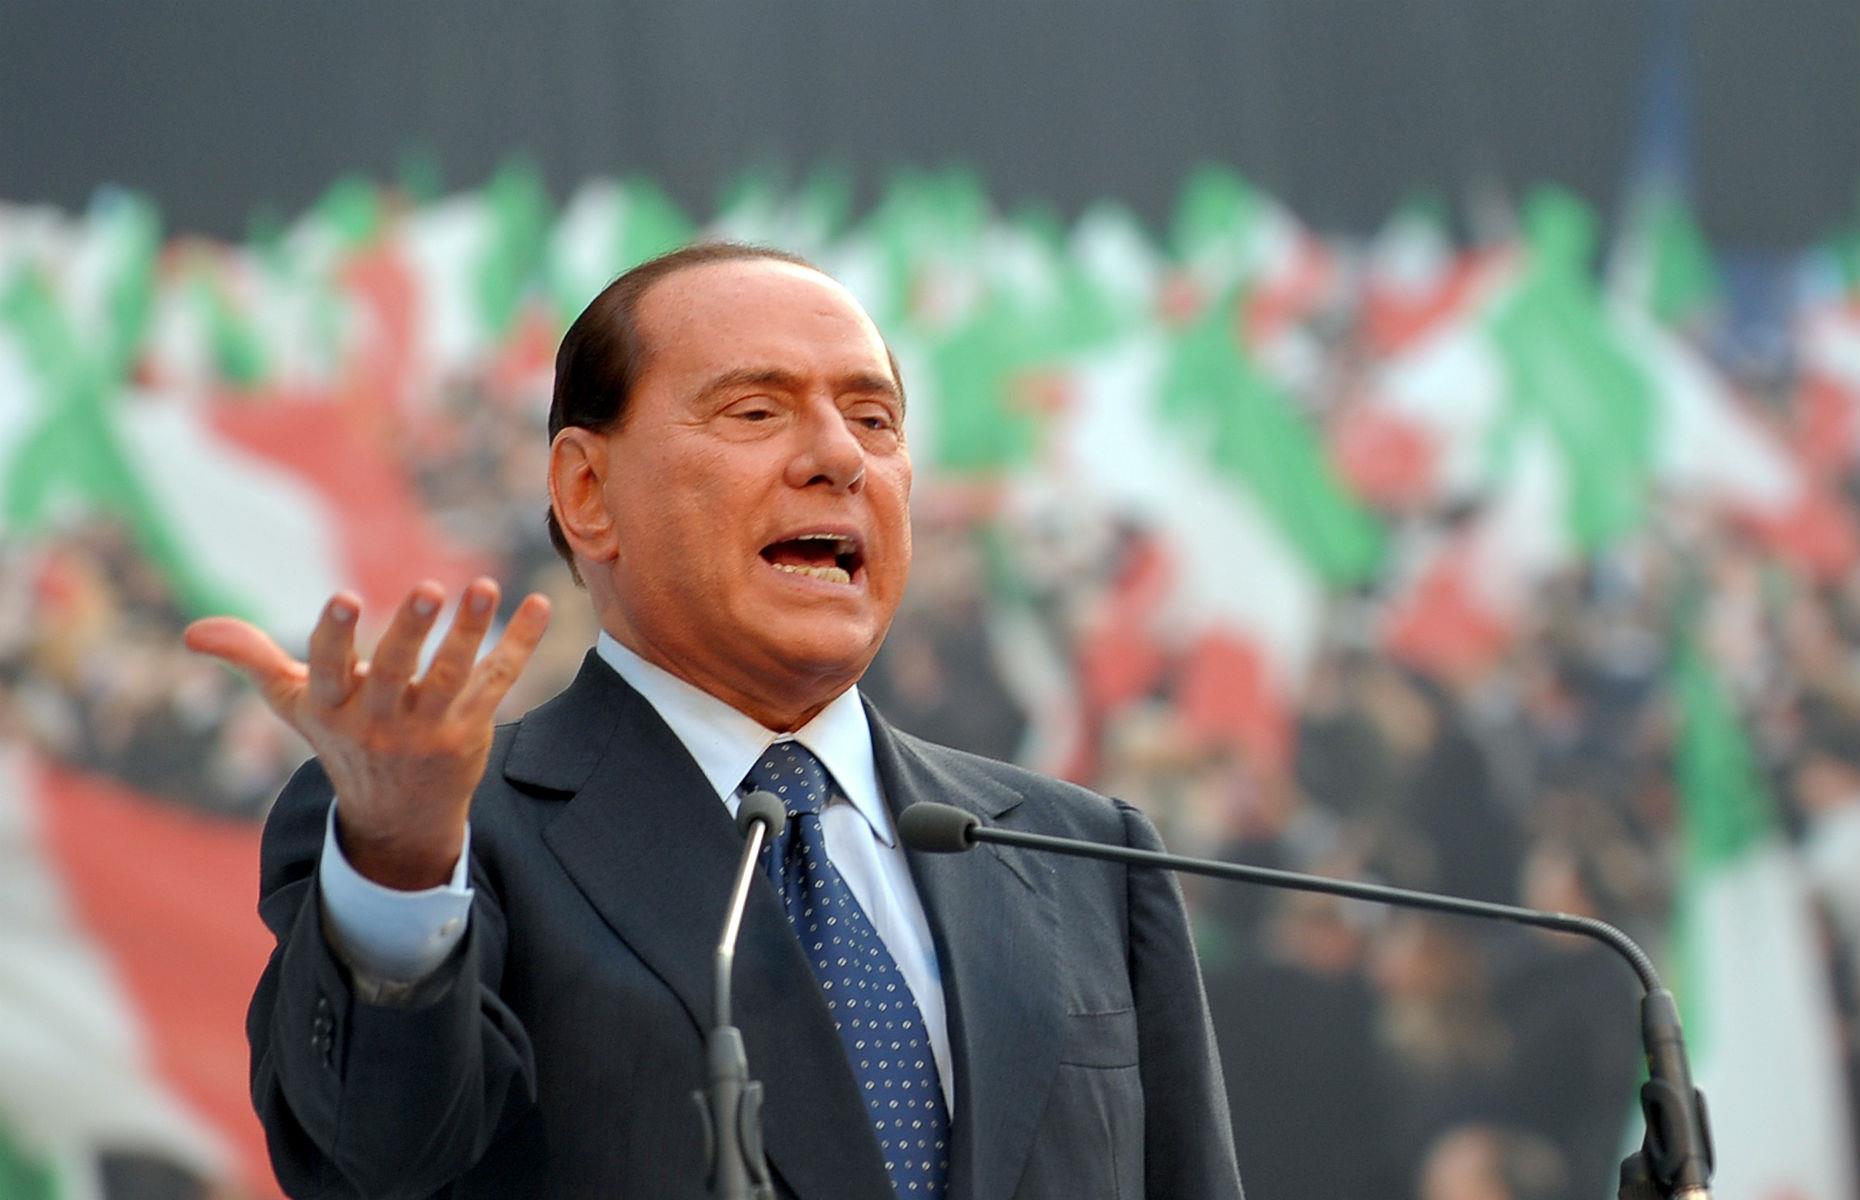 Silvio Berlusconi, Italy’s former prime minister: Cruise ship singer 